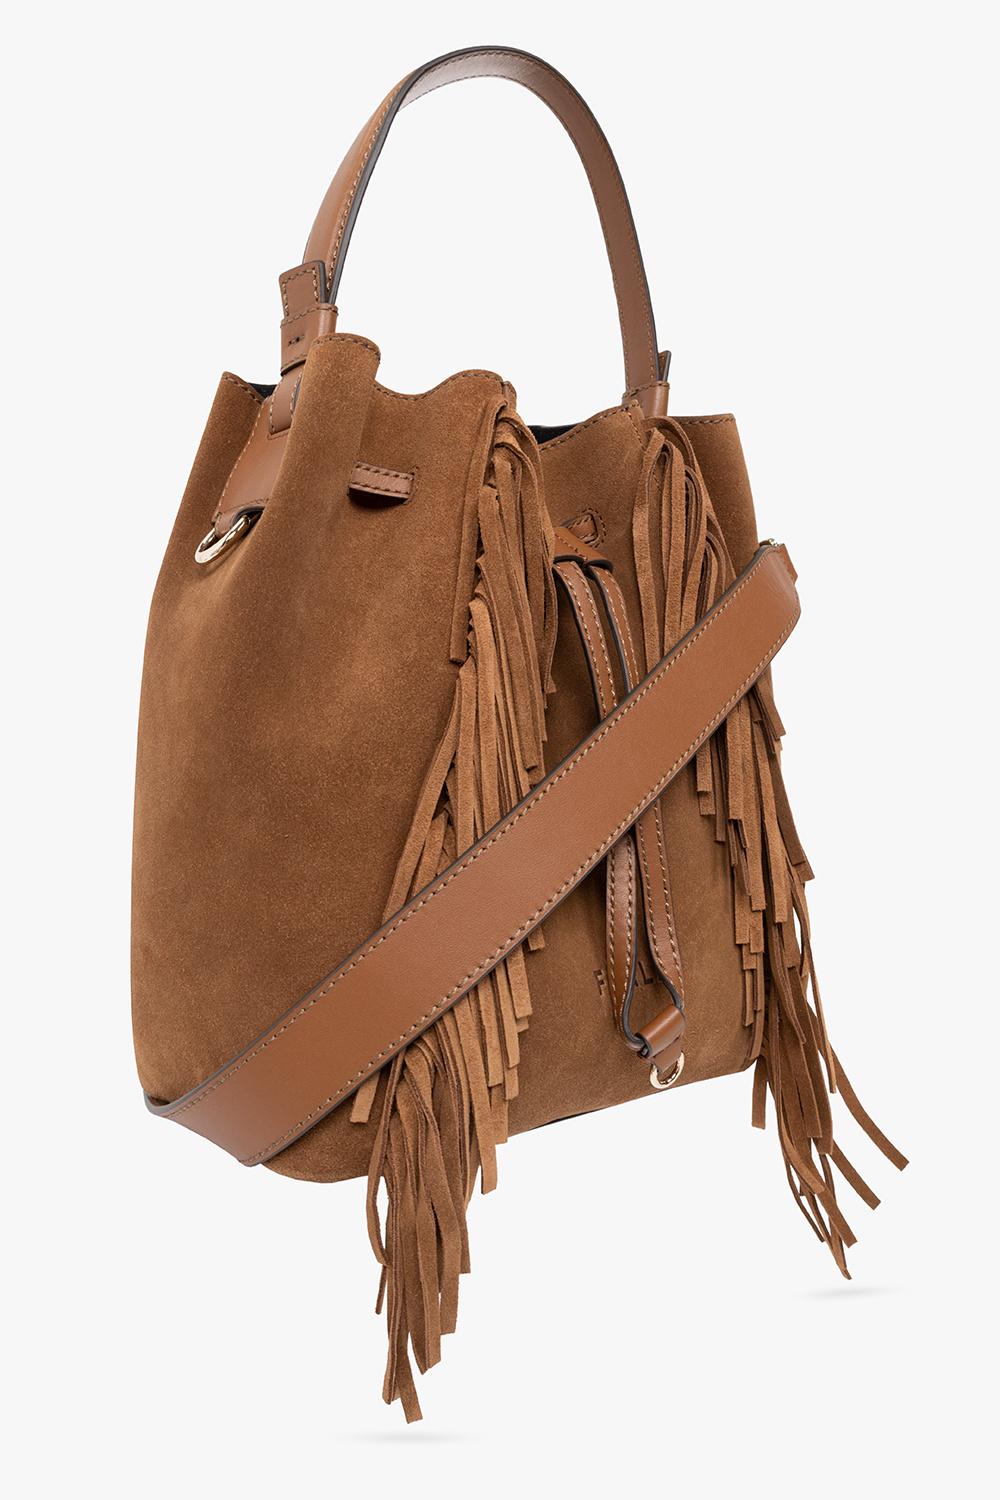 Furla 'miastella Small' Bucket Bag in Brown